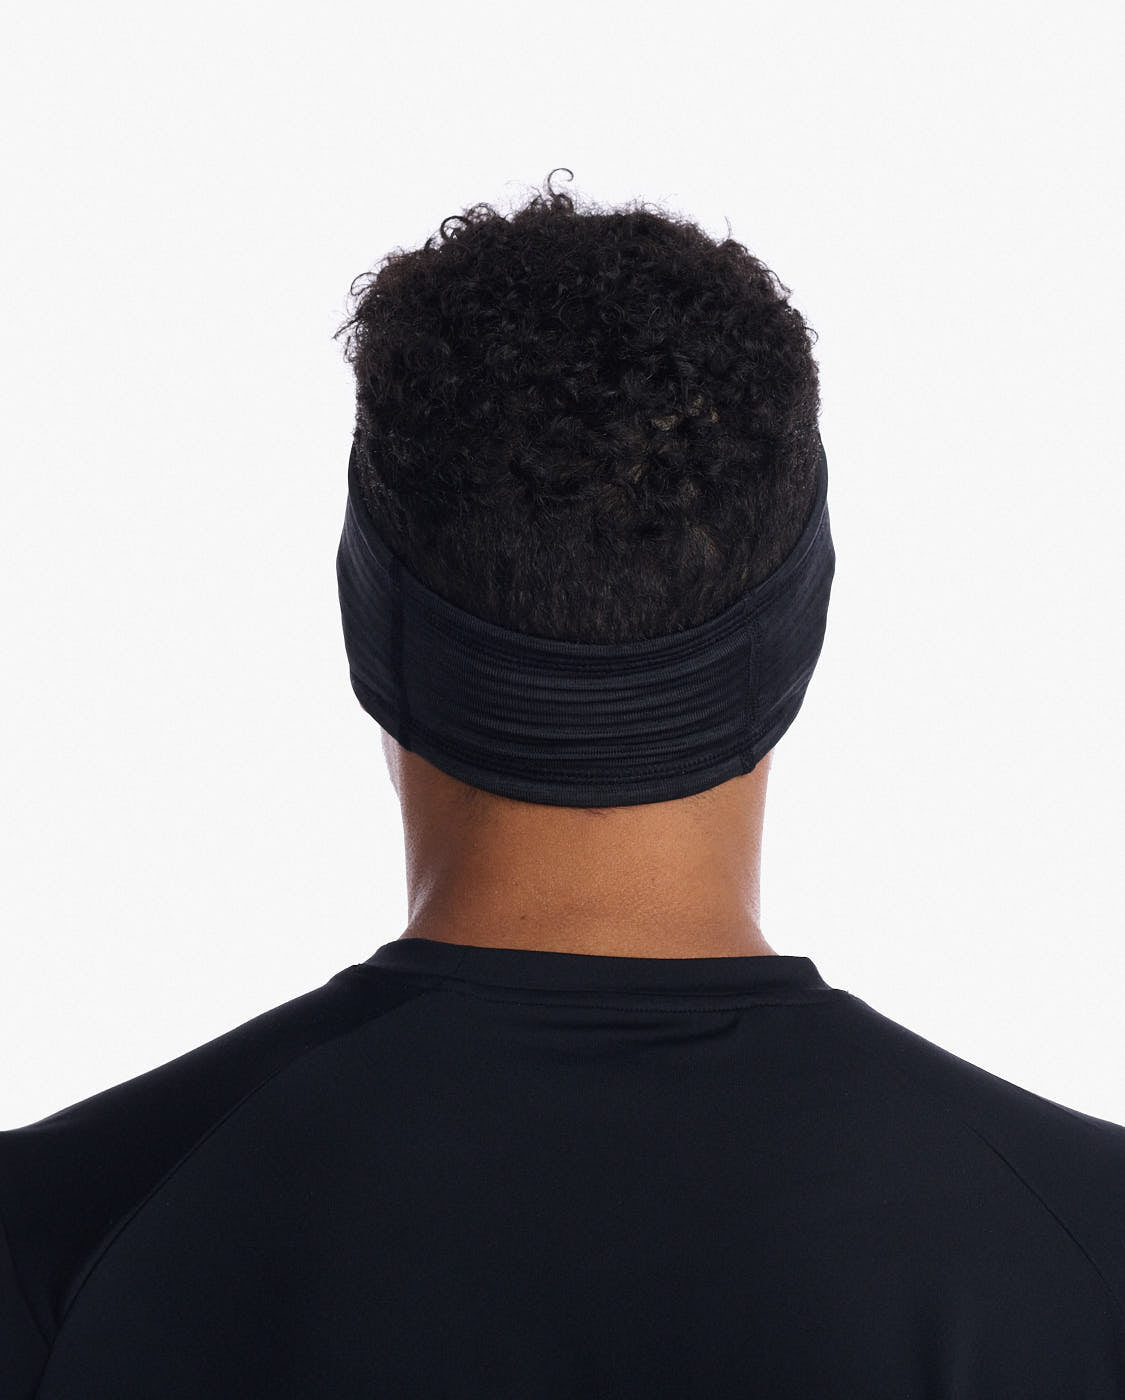 Ignition Headband, Black/Silver Reflective